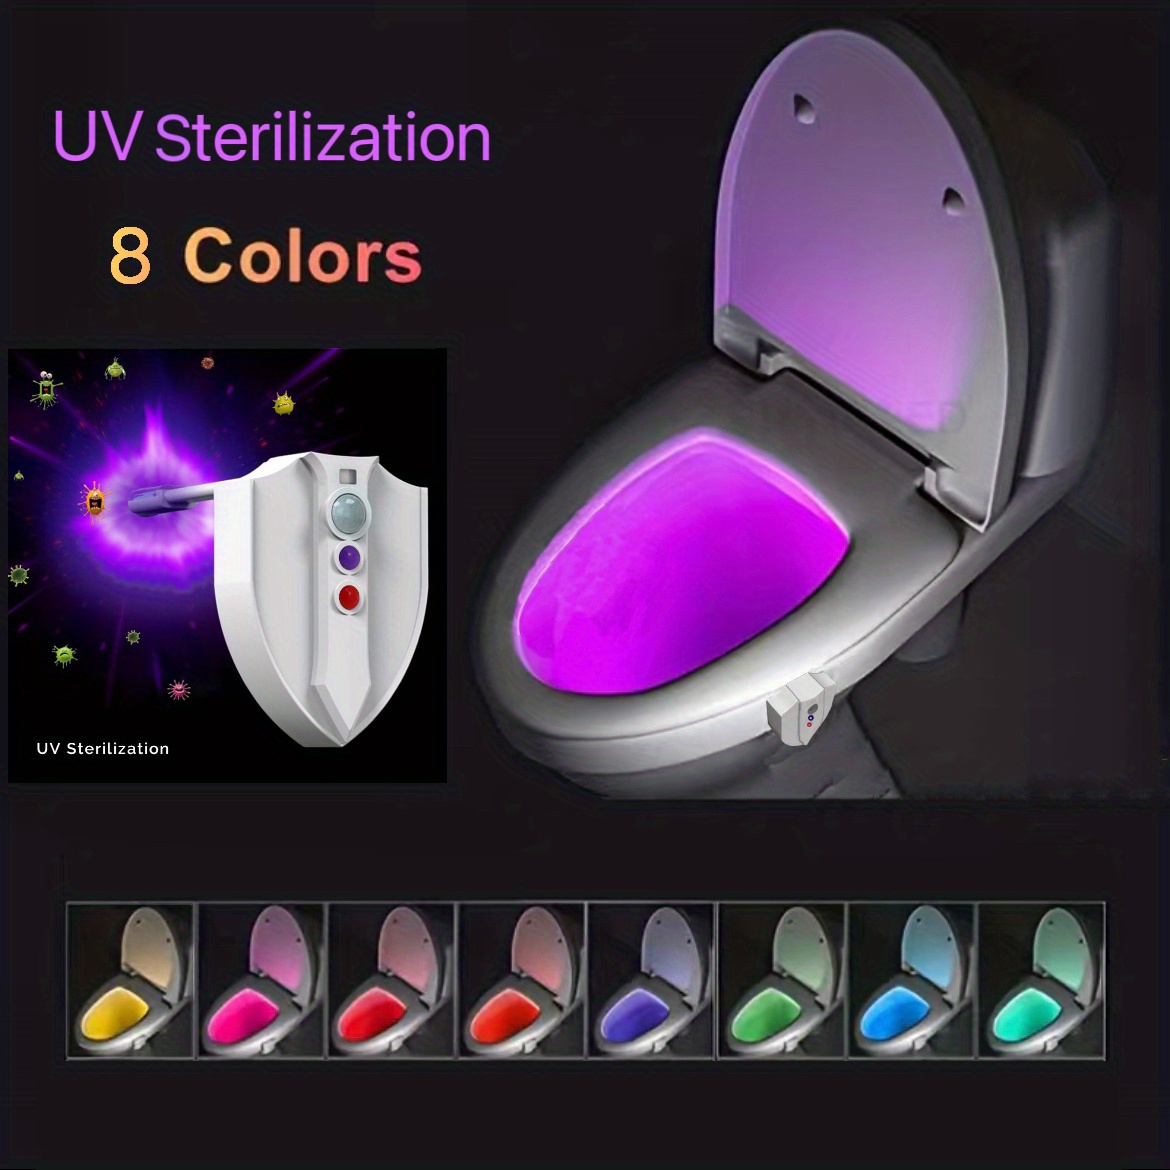 UV Toilet Lights LED Night Light Intelligent Motion Sensor 8/16-color Toilet  Lamp Bathroom Creative Lamp Led Human Induction